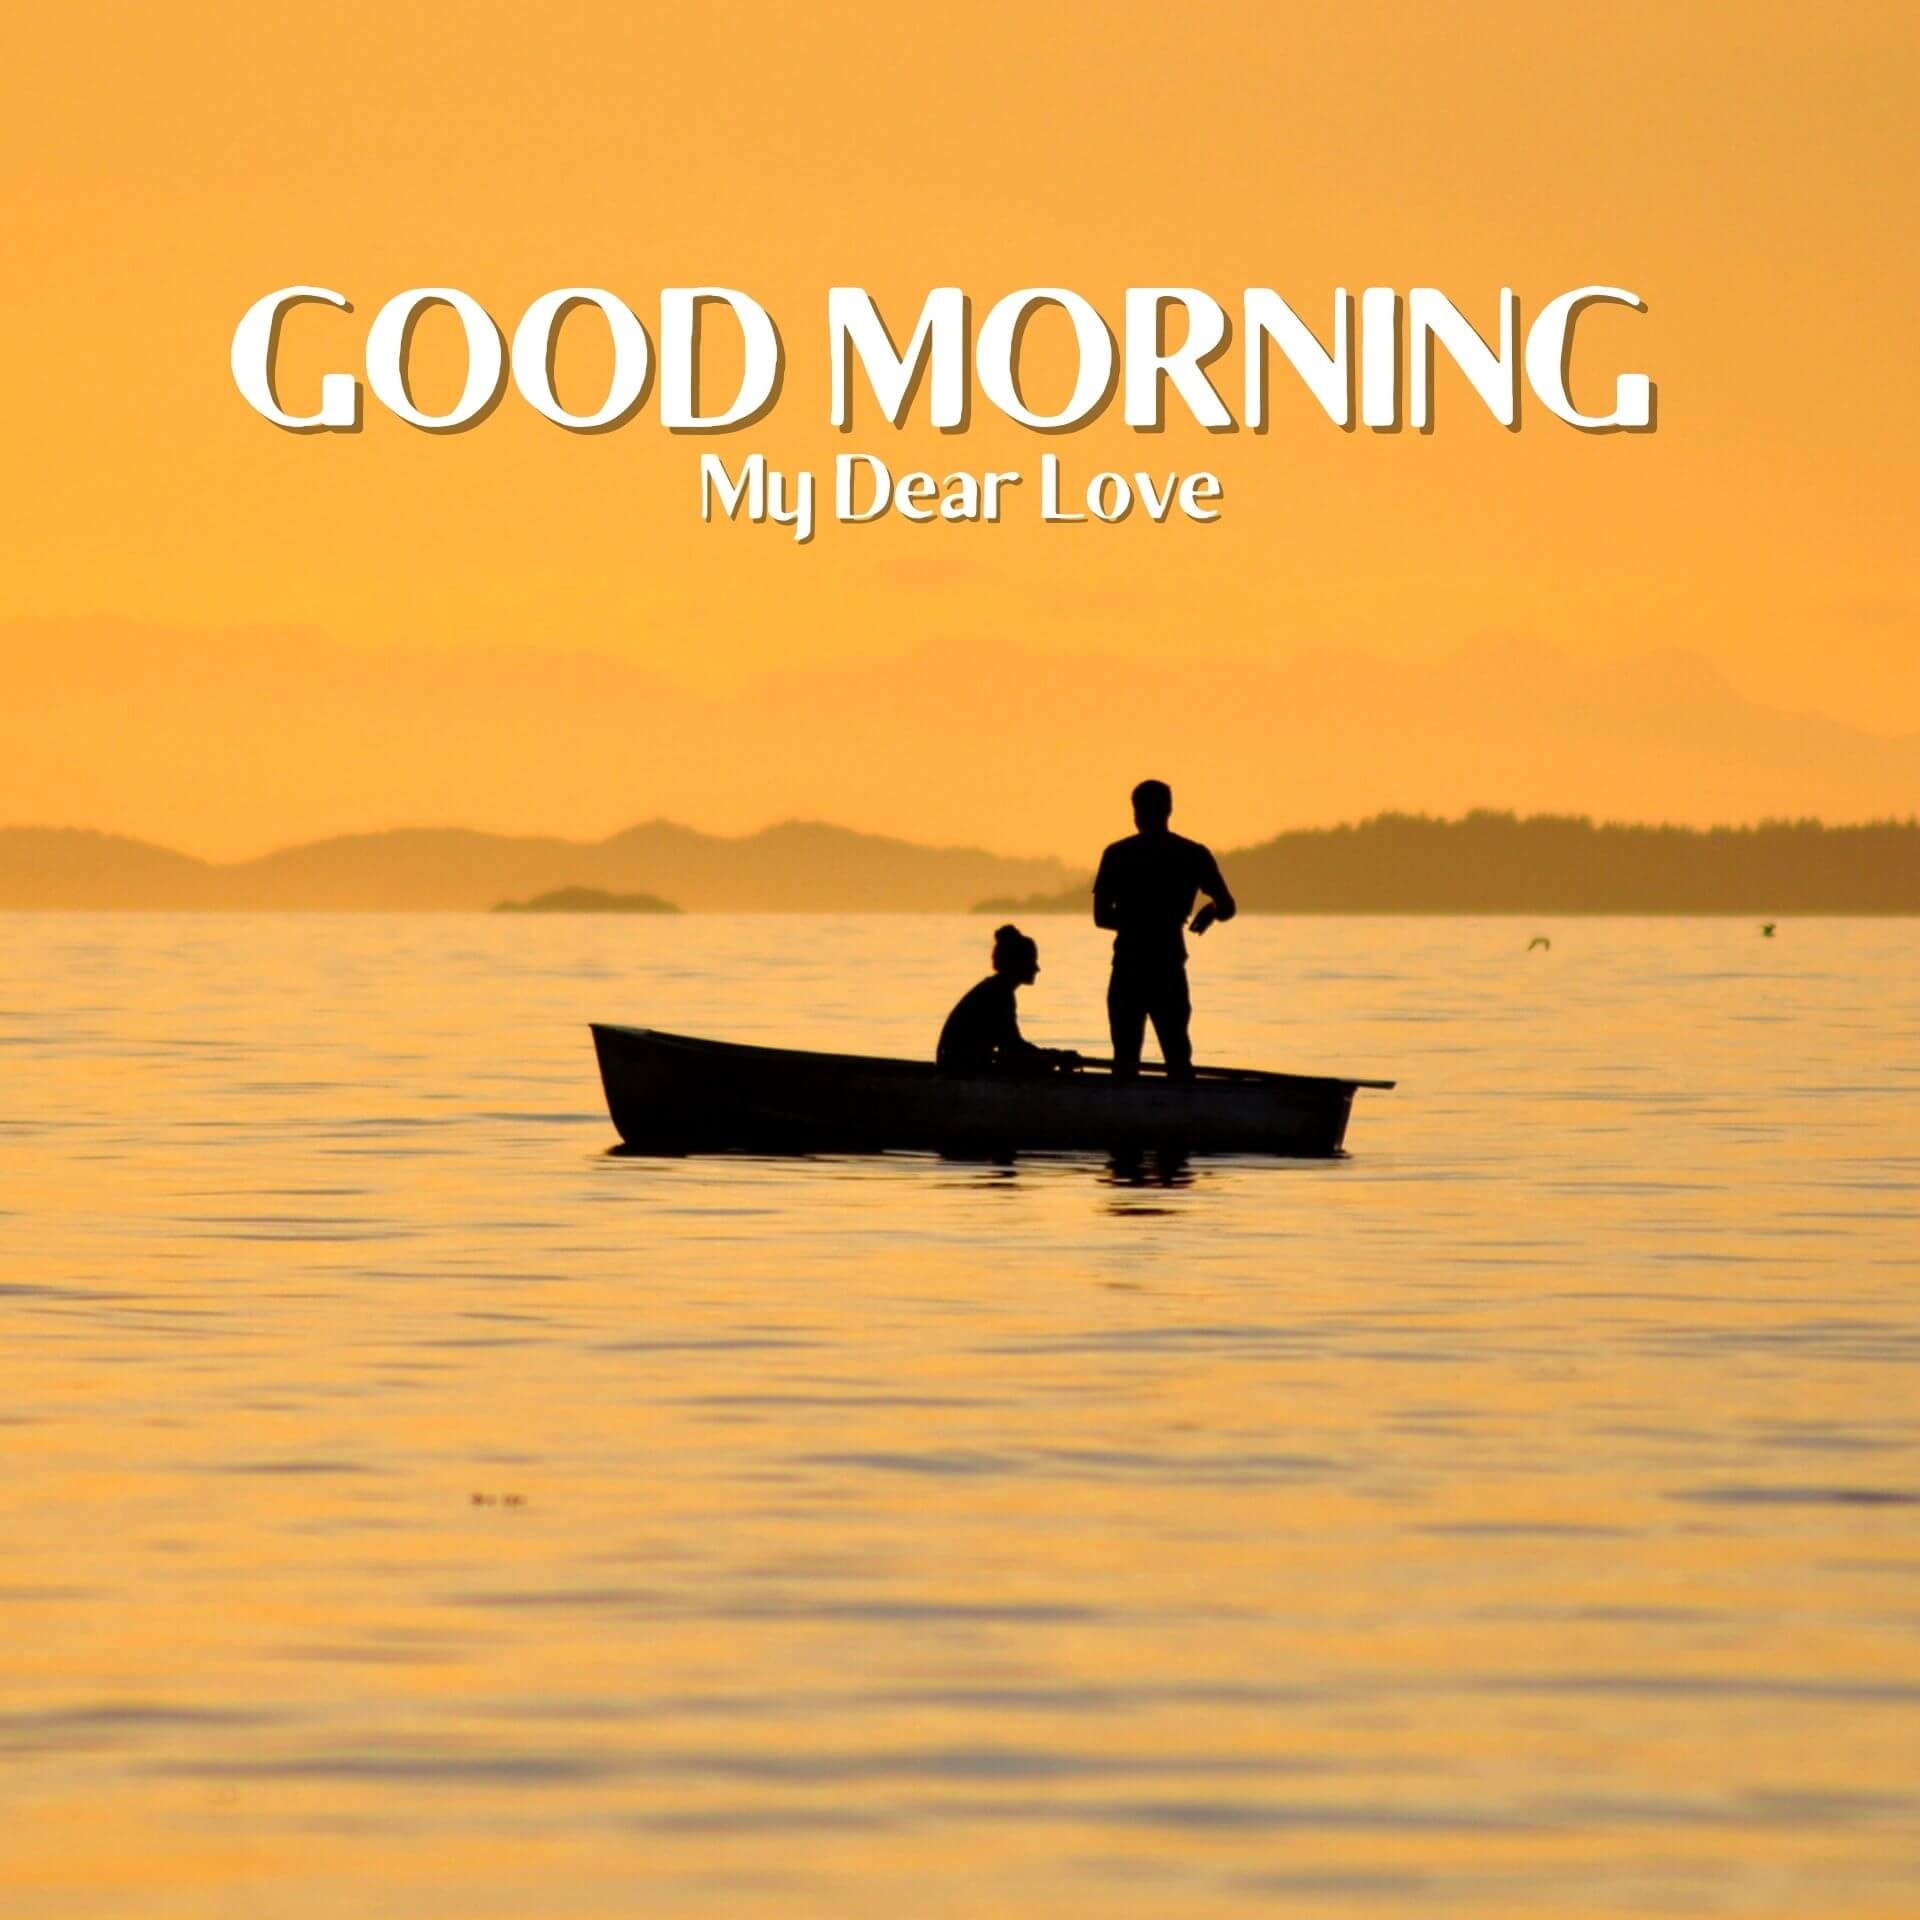 Romantic Good Morning Pics New Download